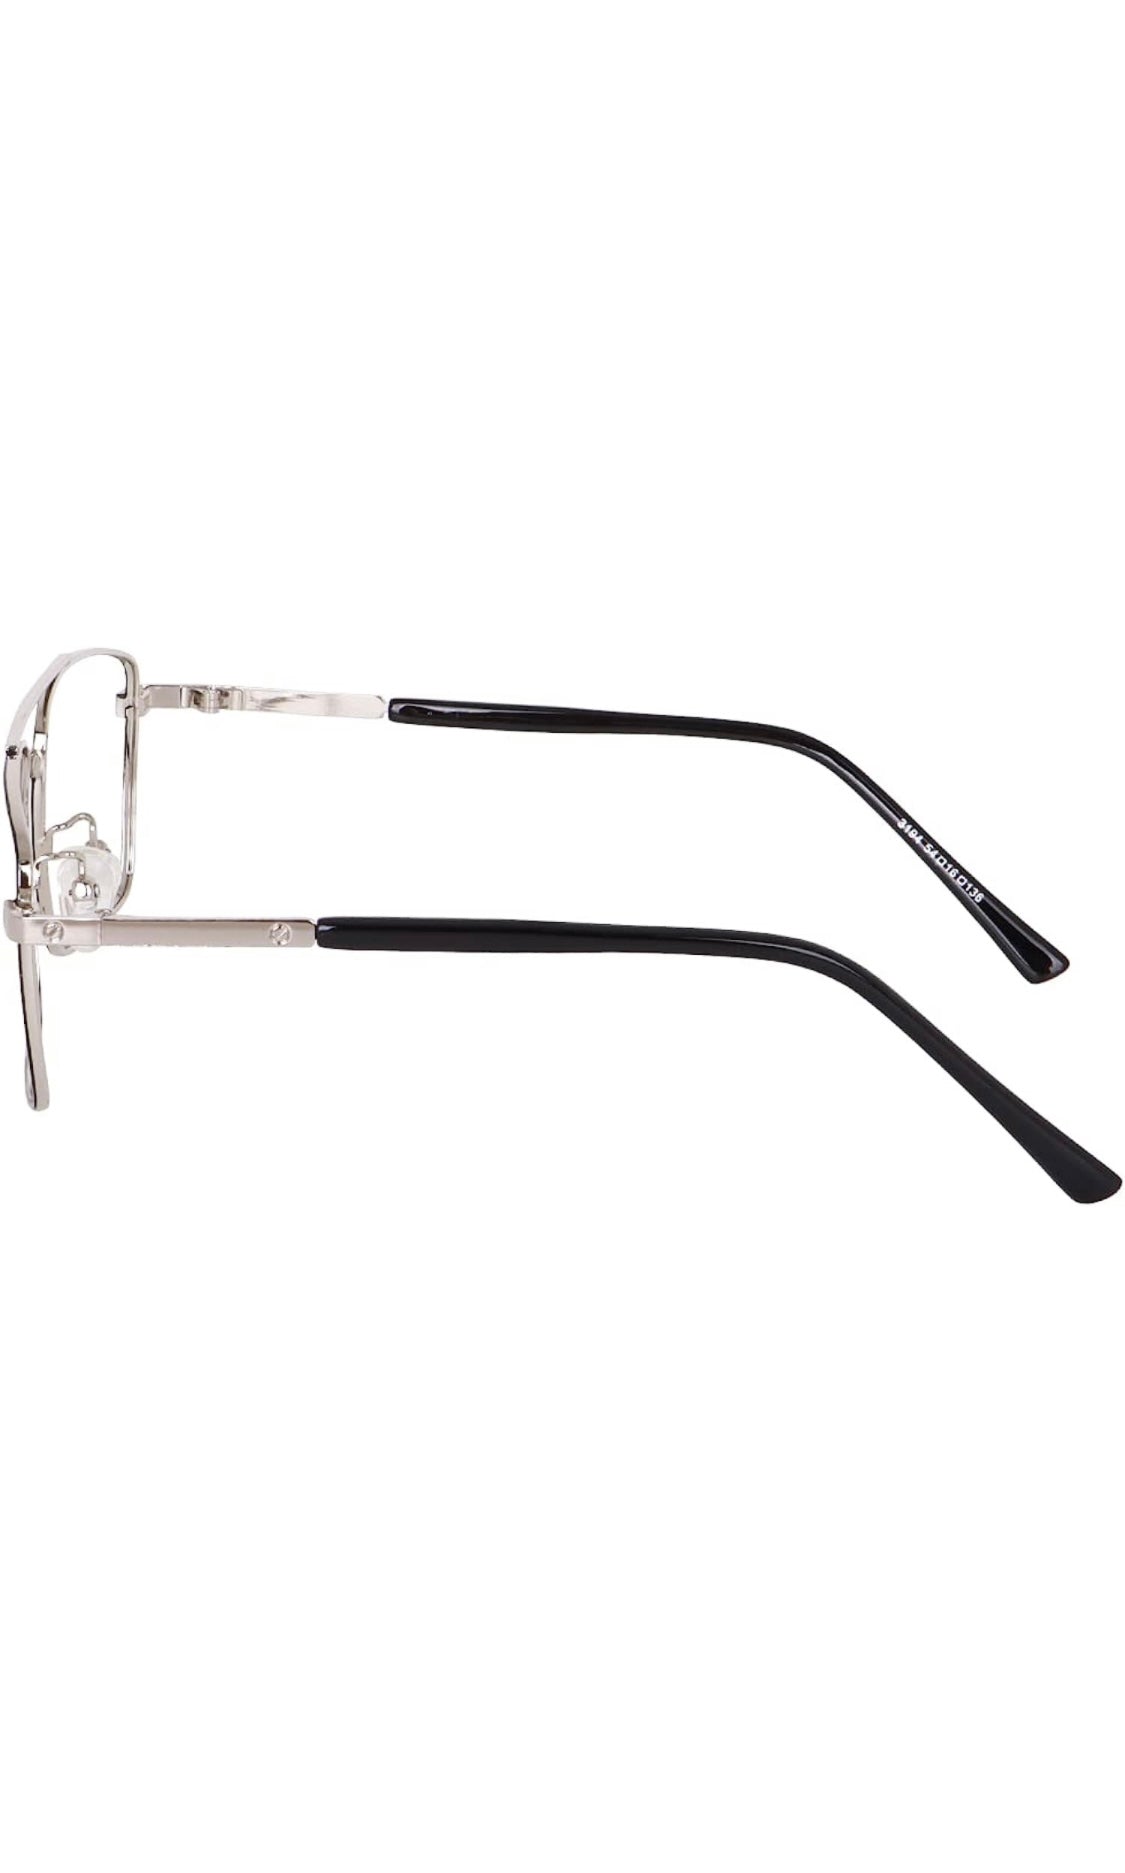 Jodykoes® New Full Rim Rectangular Blue Light Protection Computer Eyeglasses Metal Frame With Anti Glare and Blu Cut Glasses Spectacles for Men and Women Eyewear (Black & Silver) - Jodykoes ®